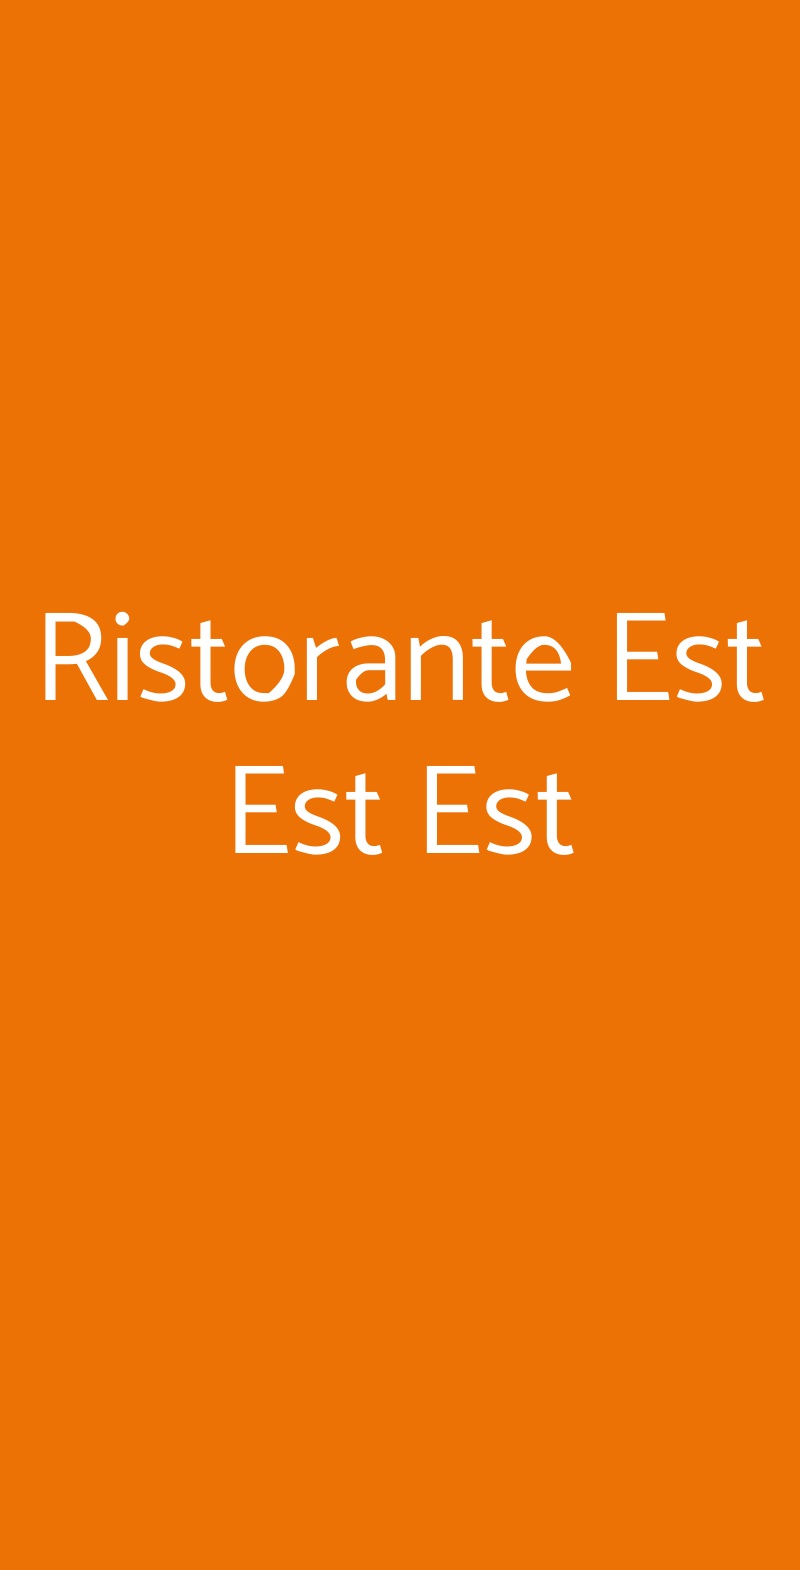 Ristorante Est Est Est Roma menù 1 pagina